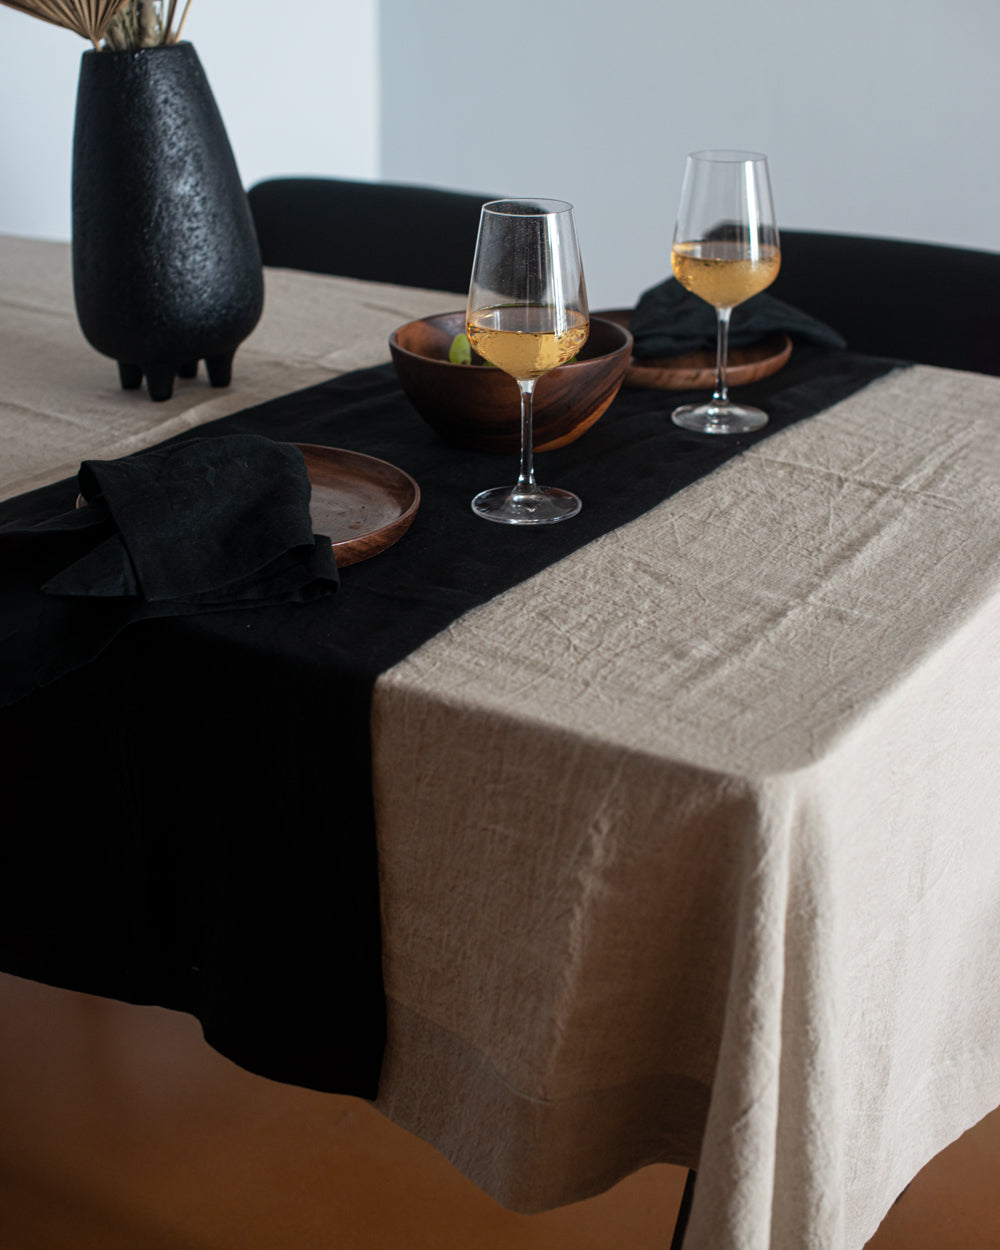 Undyed Linen Tablecloth